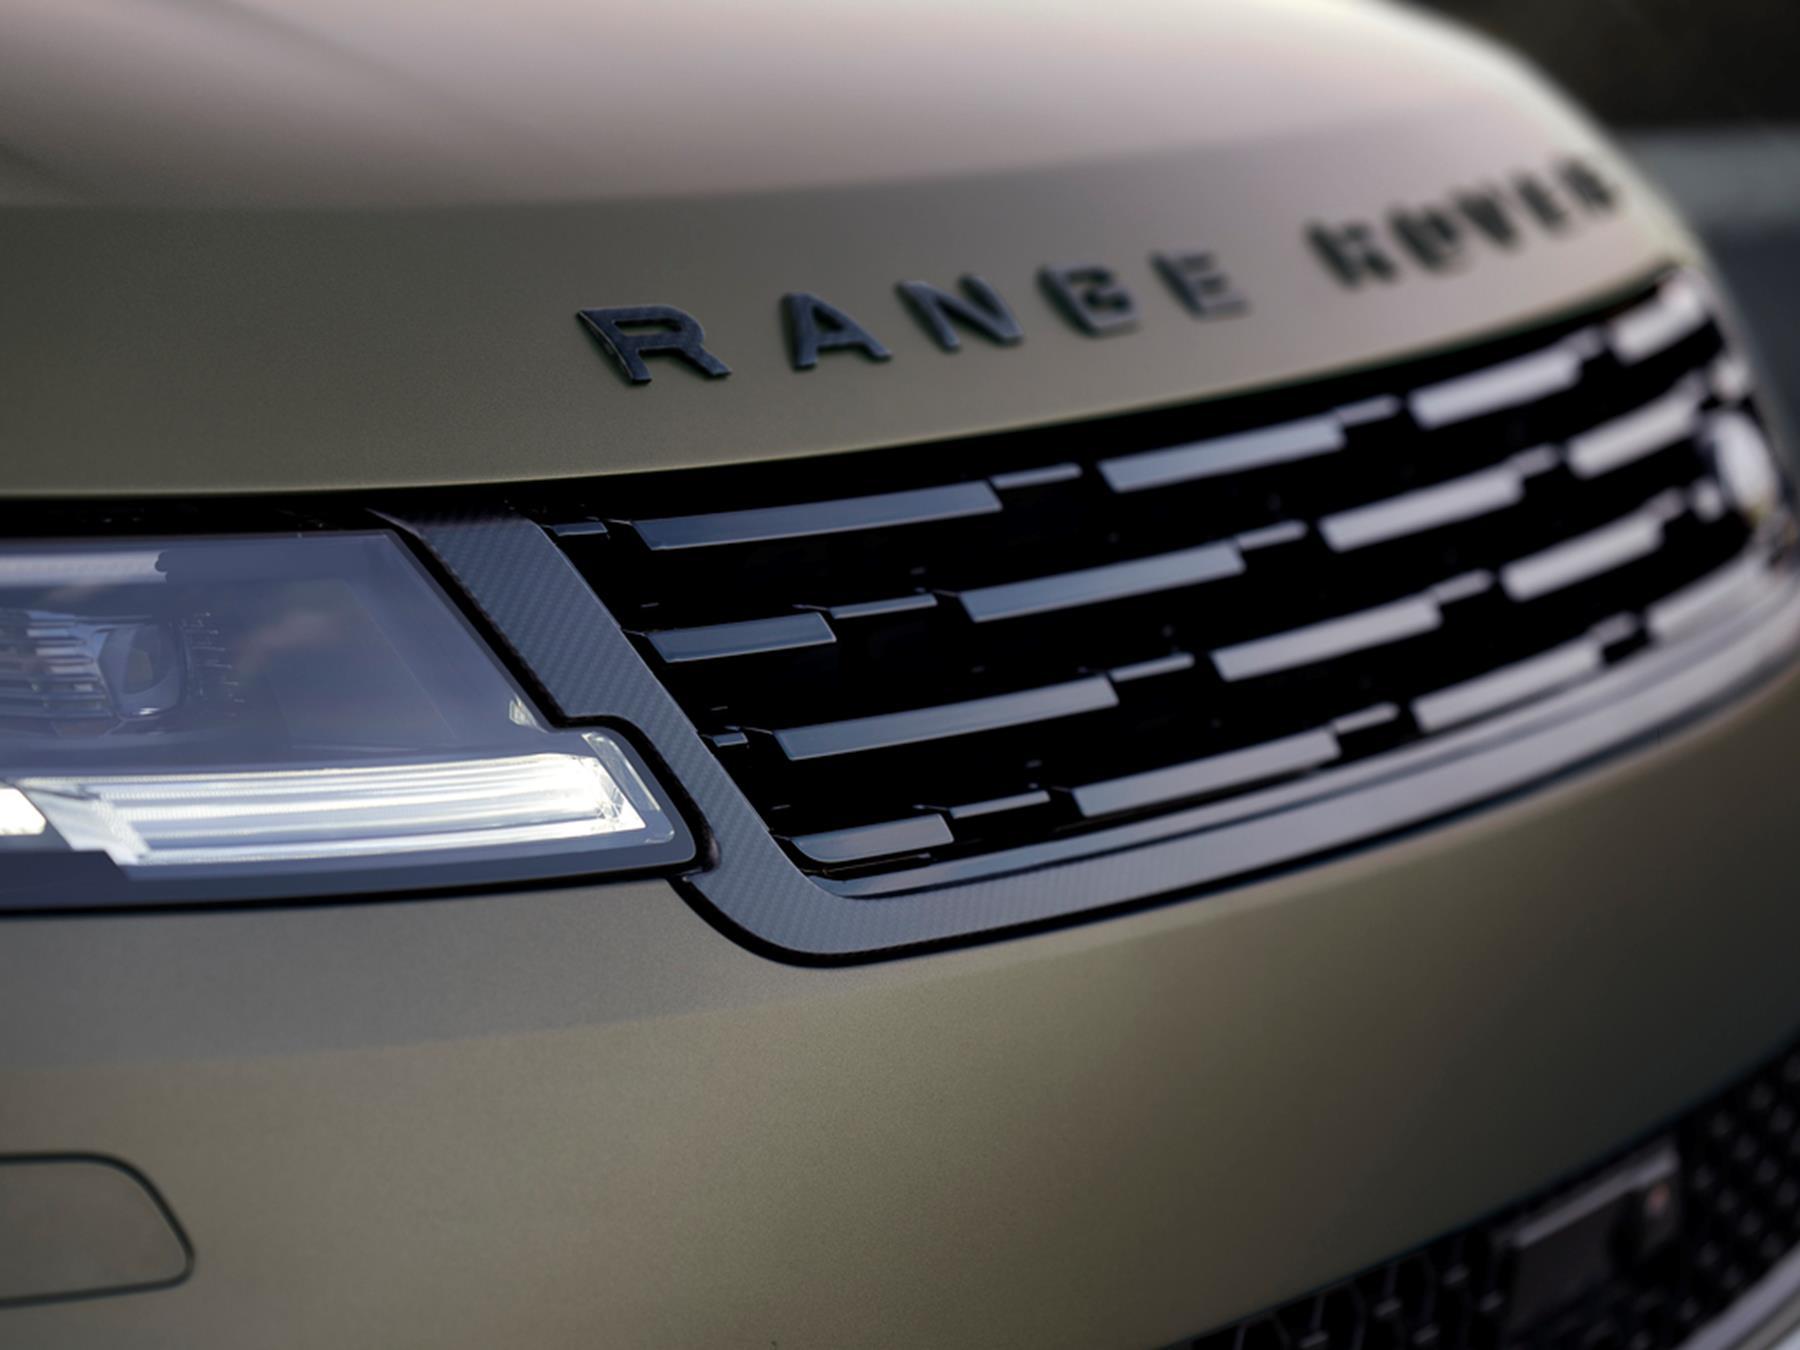 Explore Range Rover Sport